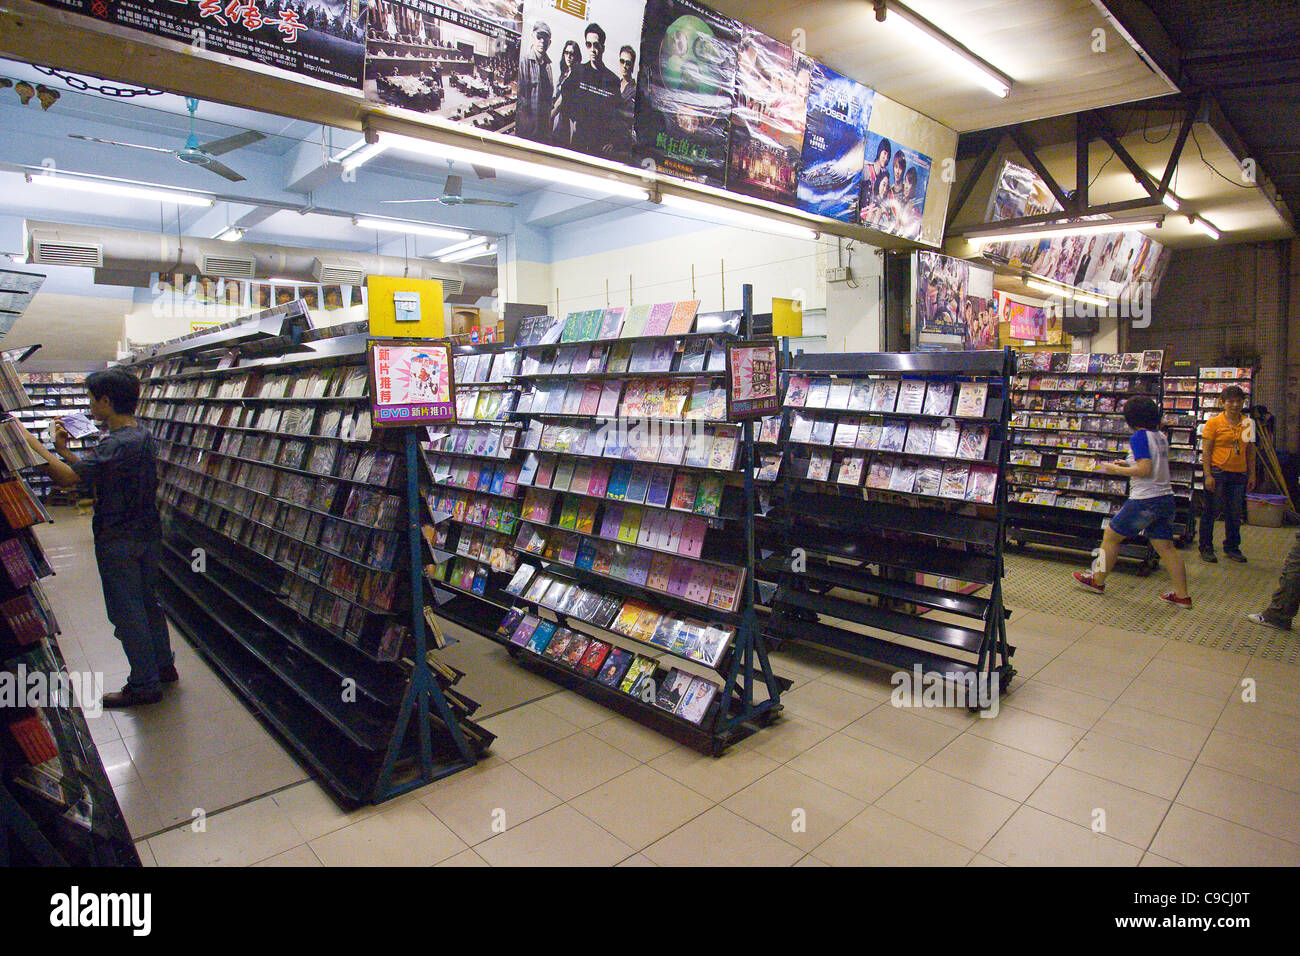 SHA WAN VILLAGE, PAN YU, GUANGDONG PROVINCE, CHINA - Store selling CD and DVD music and movies. Stock Photo